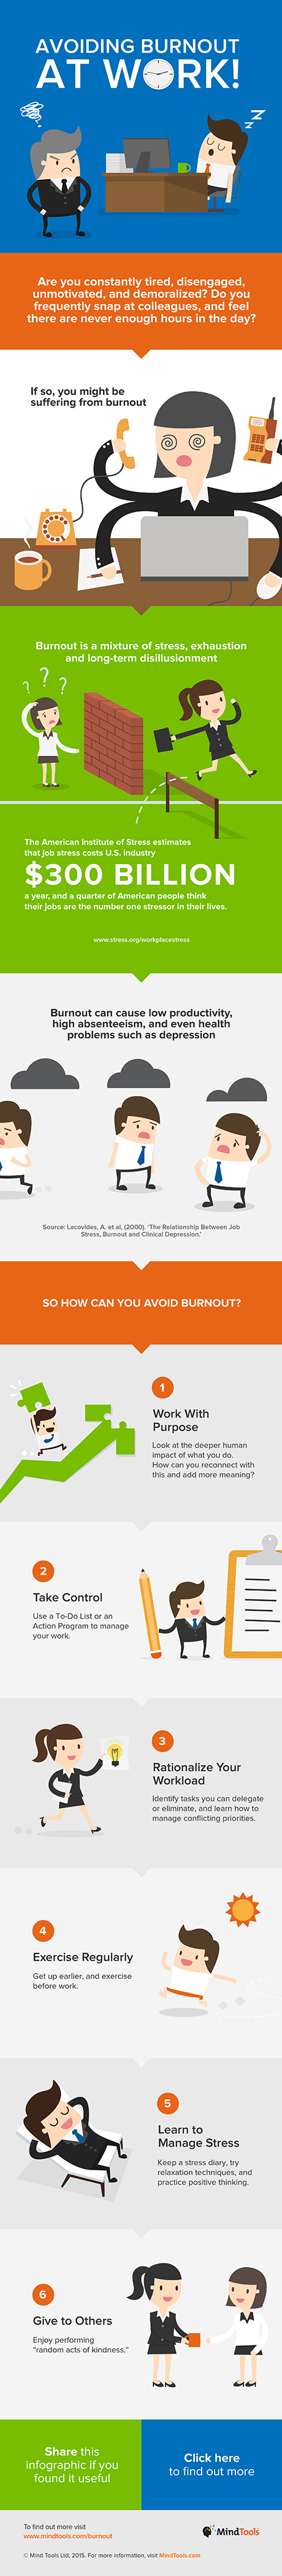 Avoiding Burnout at Work! Infographic